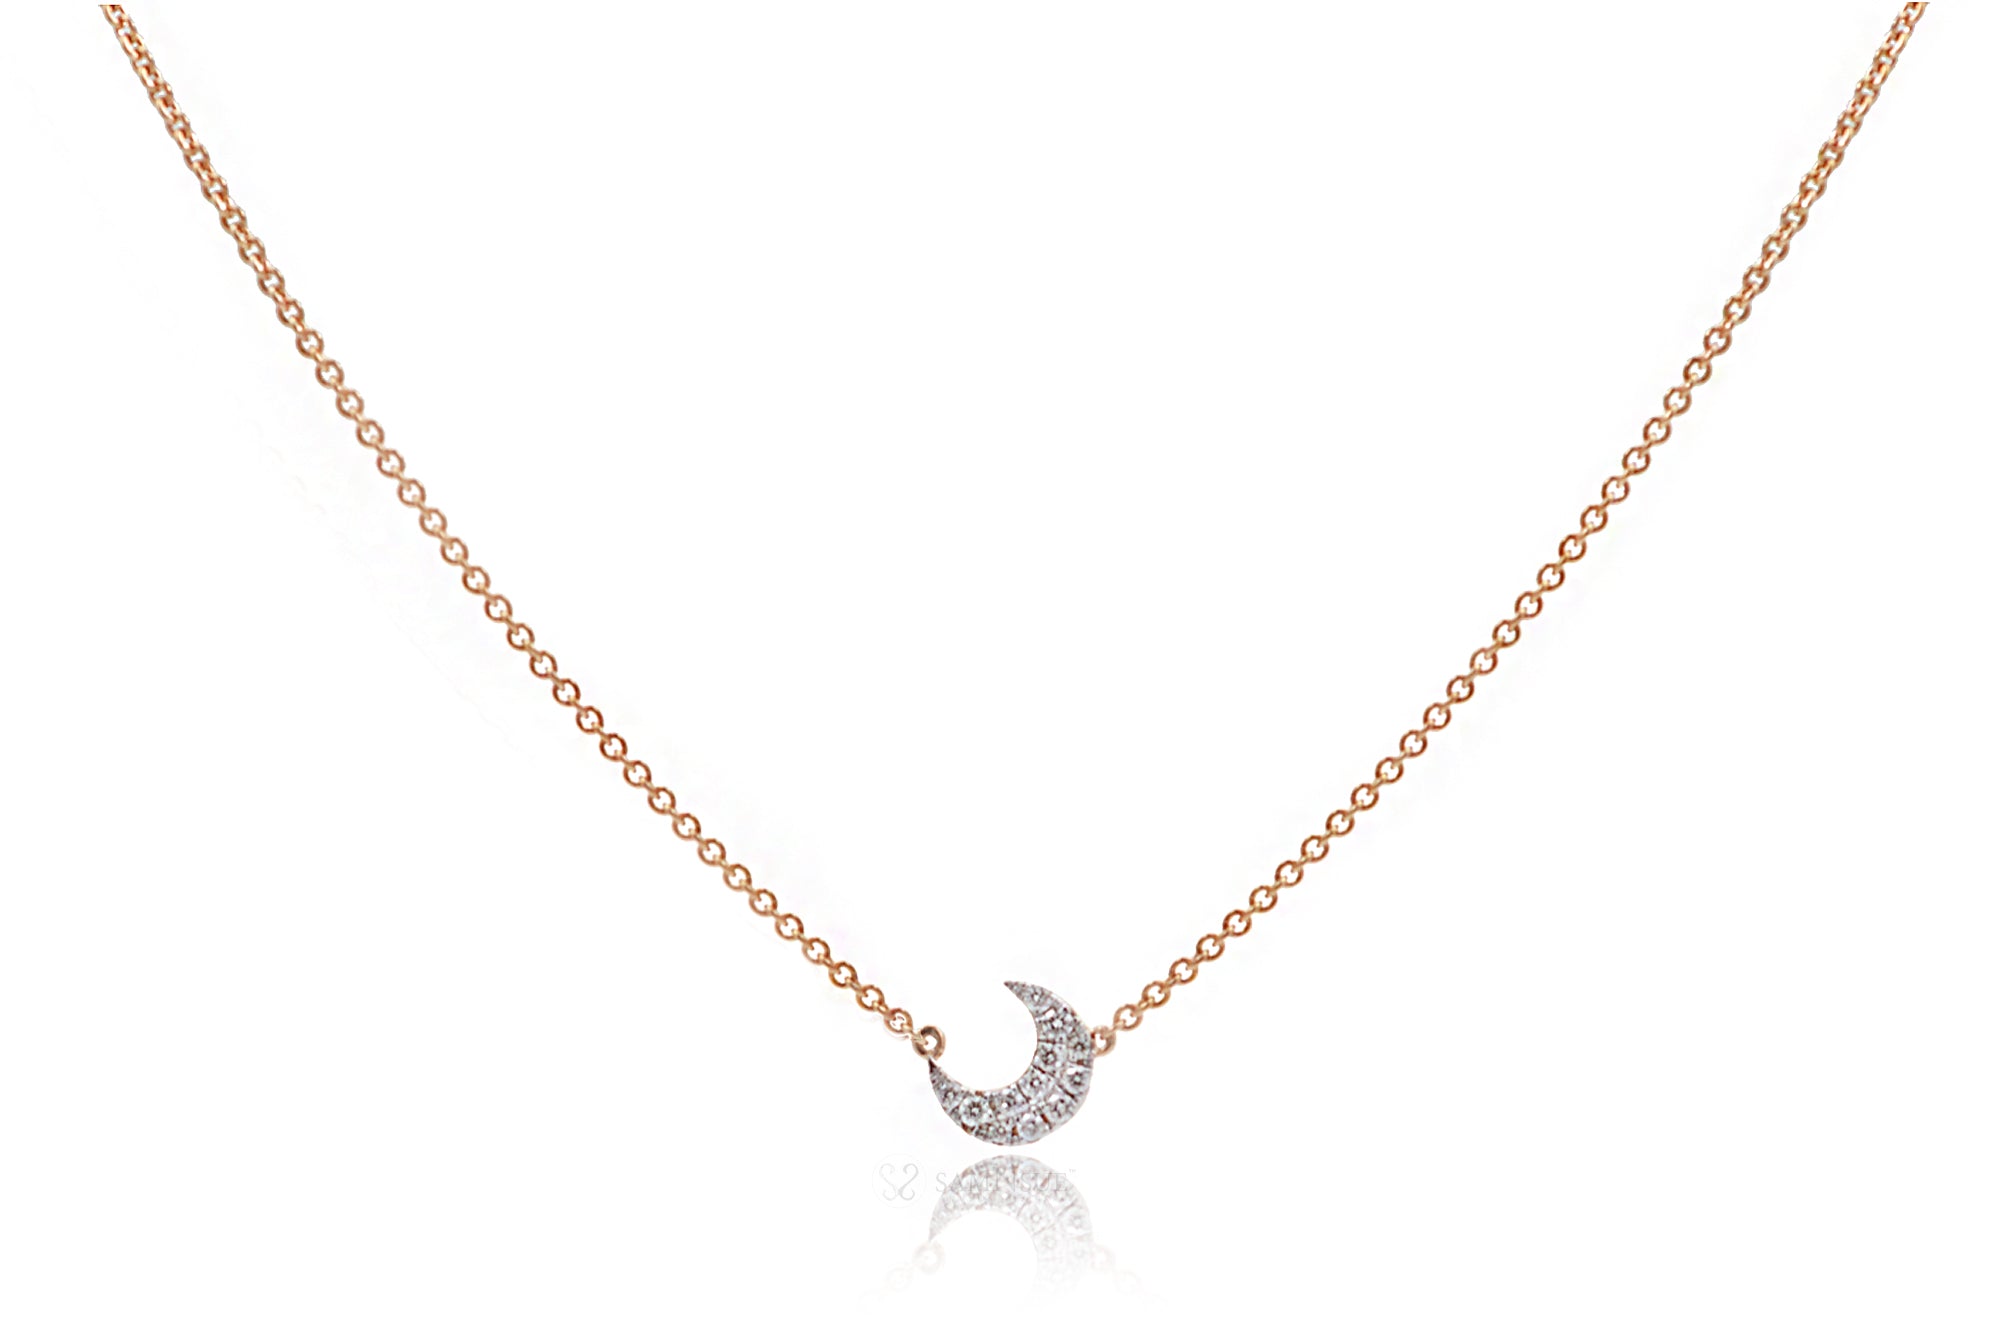 The Diamond Crescent Moon Pavé Plate Necklace